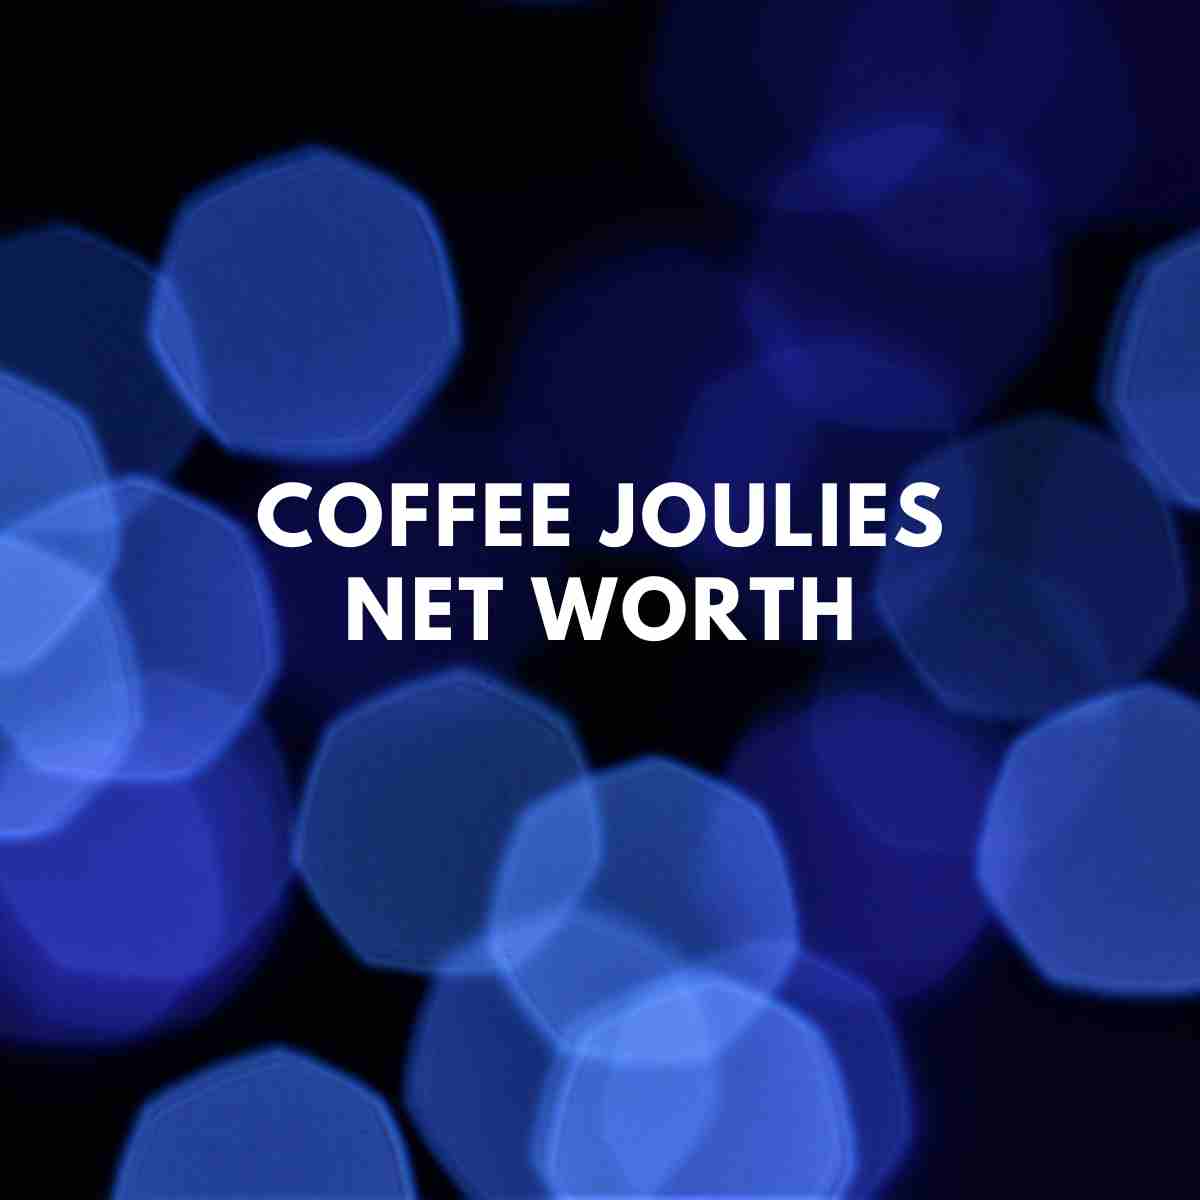 https://famouspeopletoday.com/wp-content/uploads/2022/11/Coffee-Joulies-net-worth.jpg